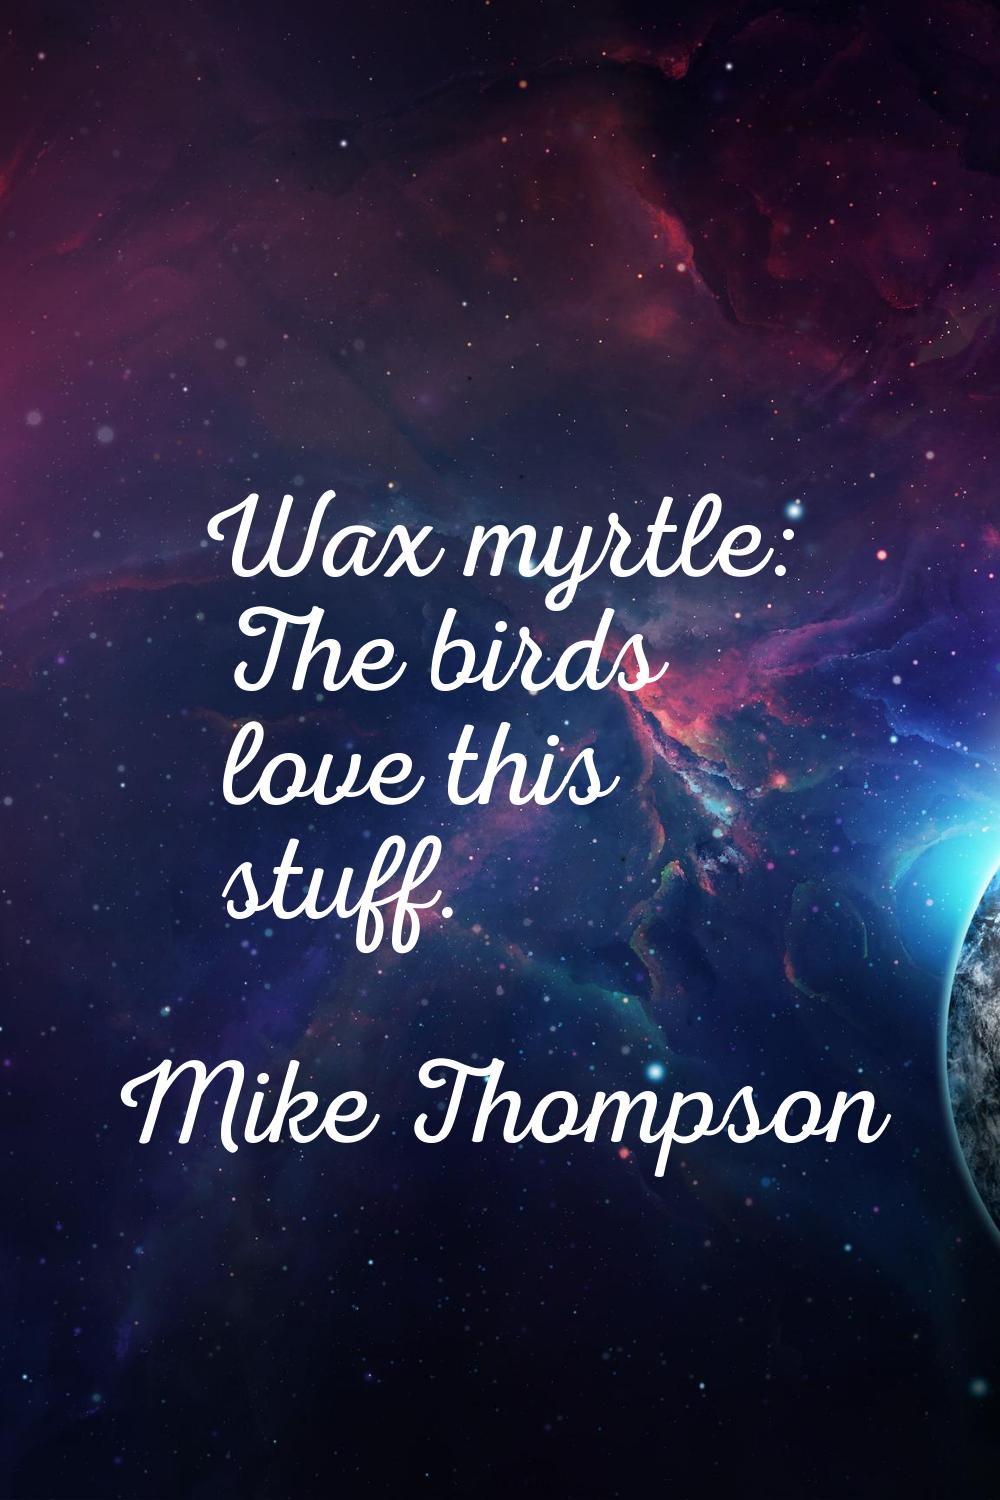 Wax myrtle: The birds love this stuff.